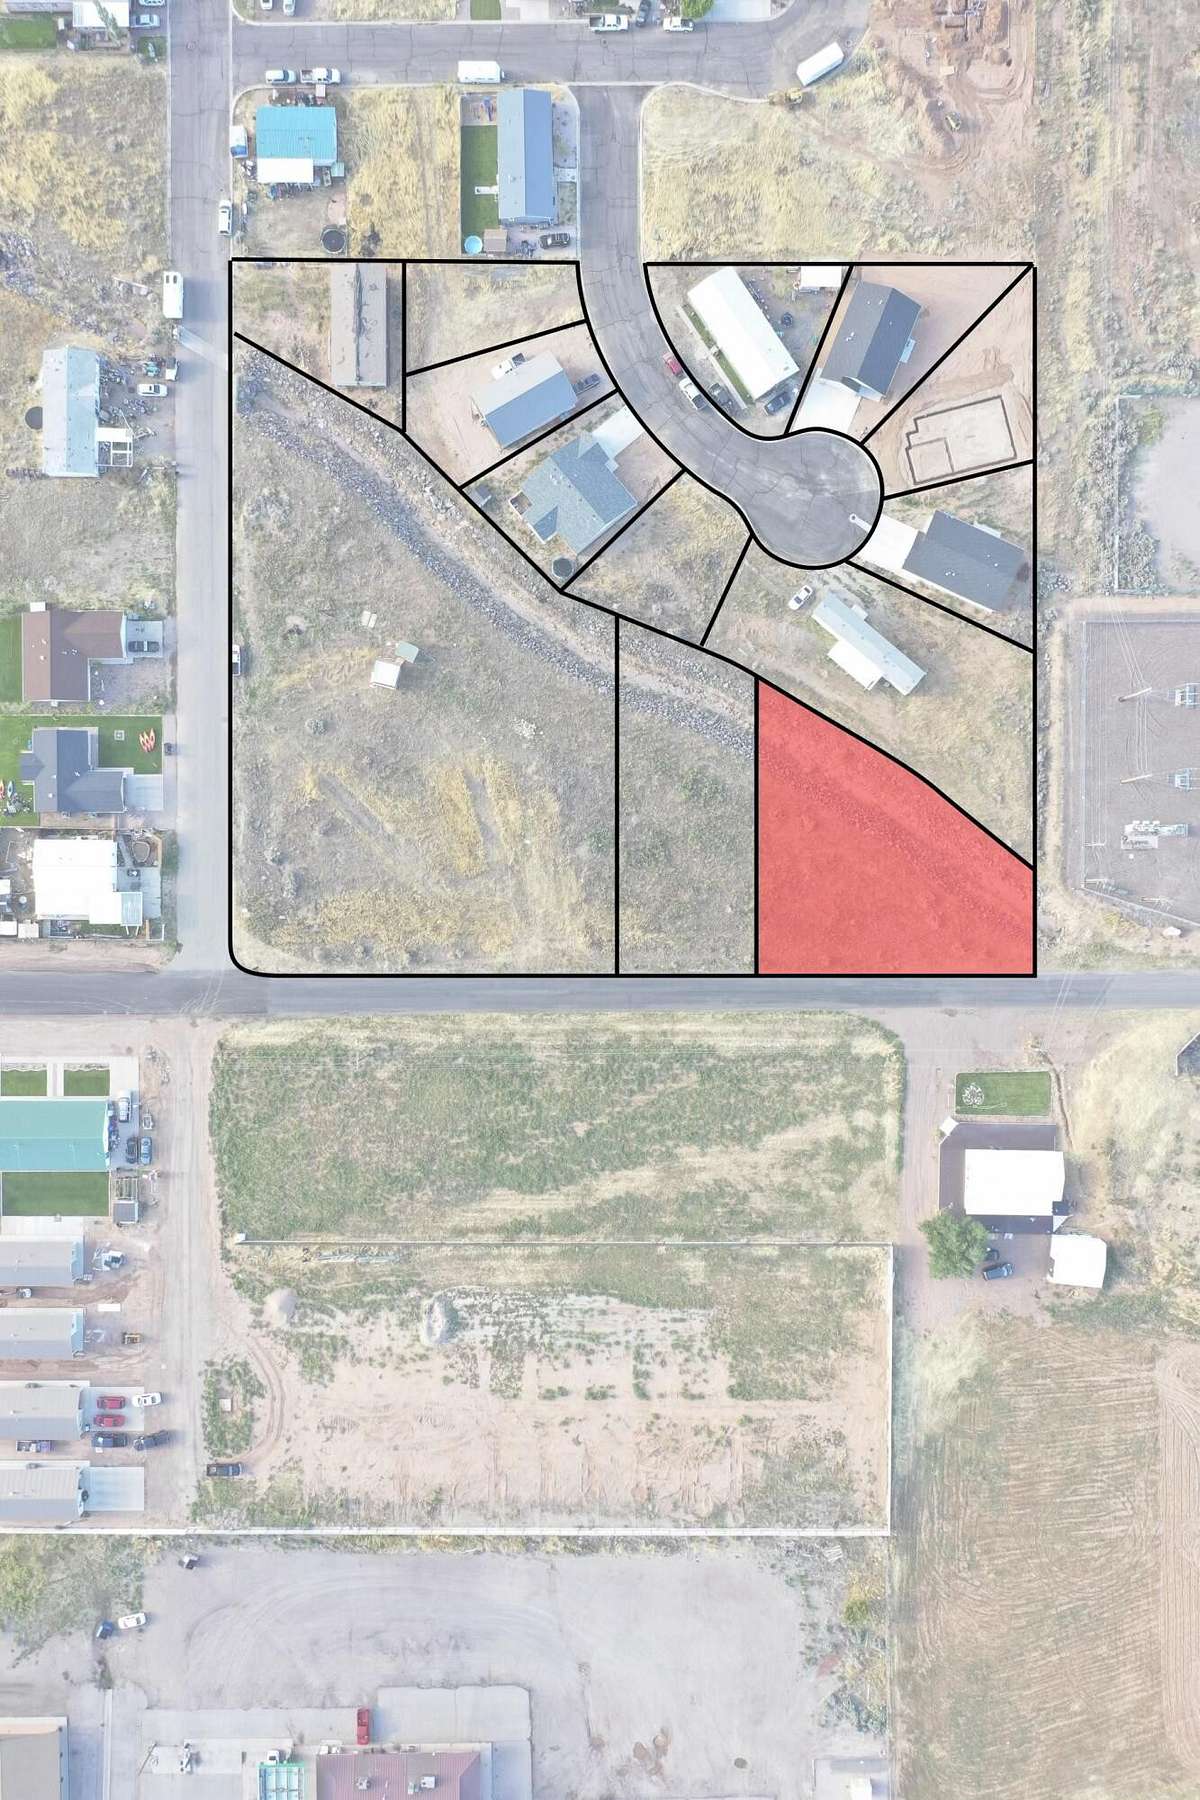 0.32 Acres of Residential Land for Sale in Enterprise, Utah